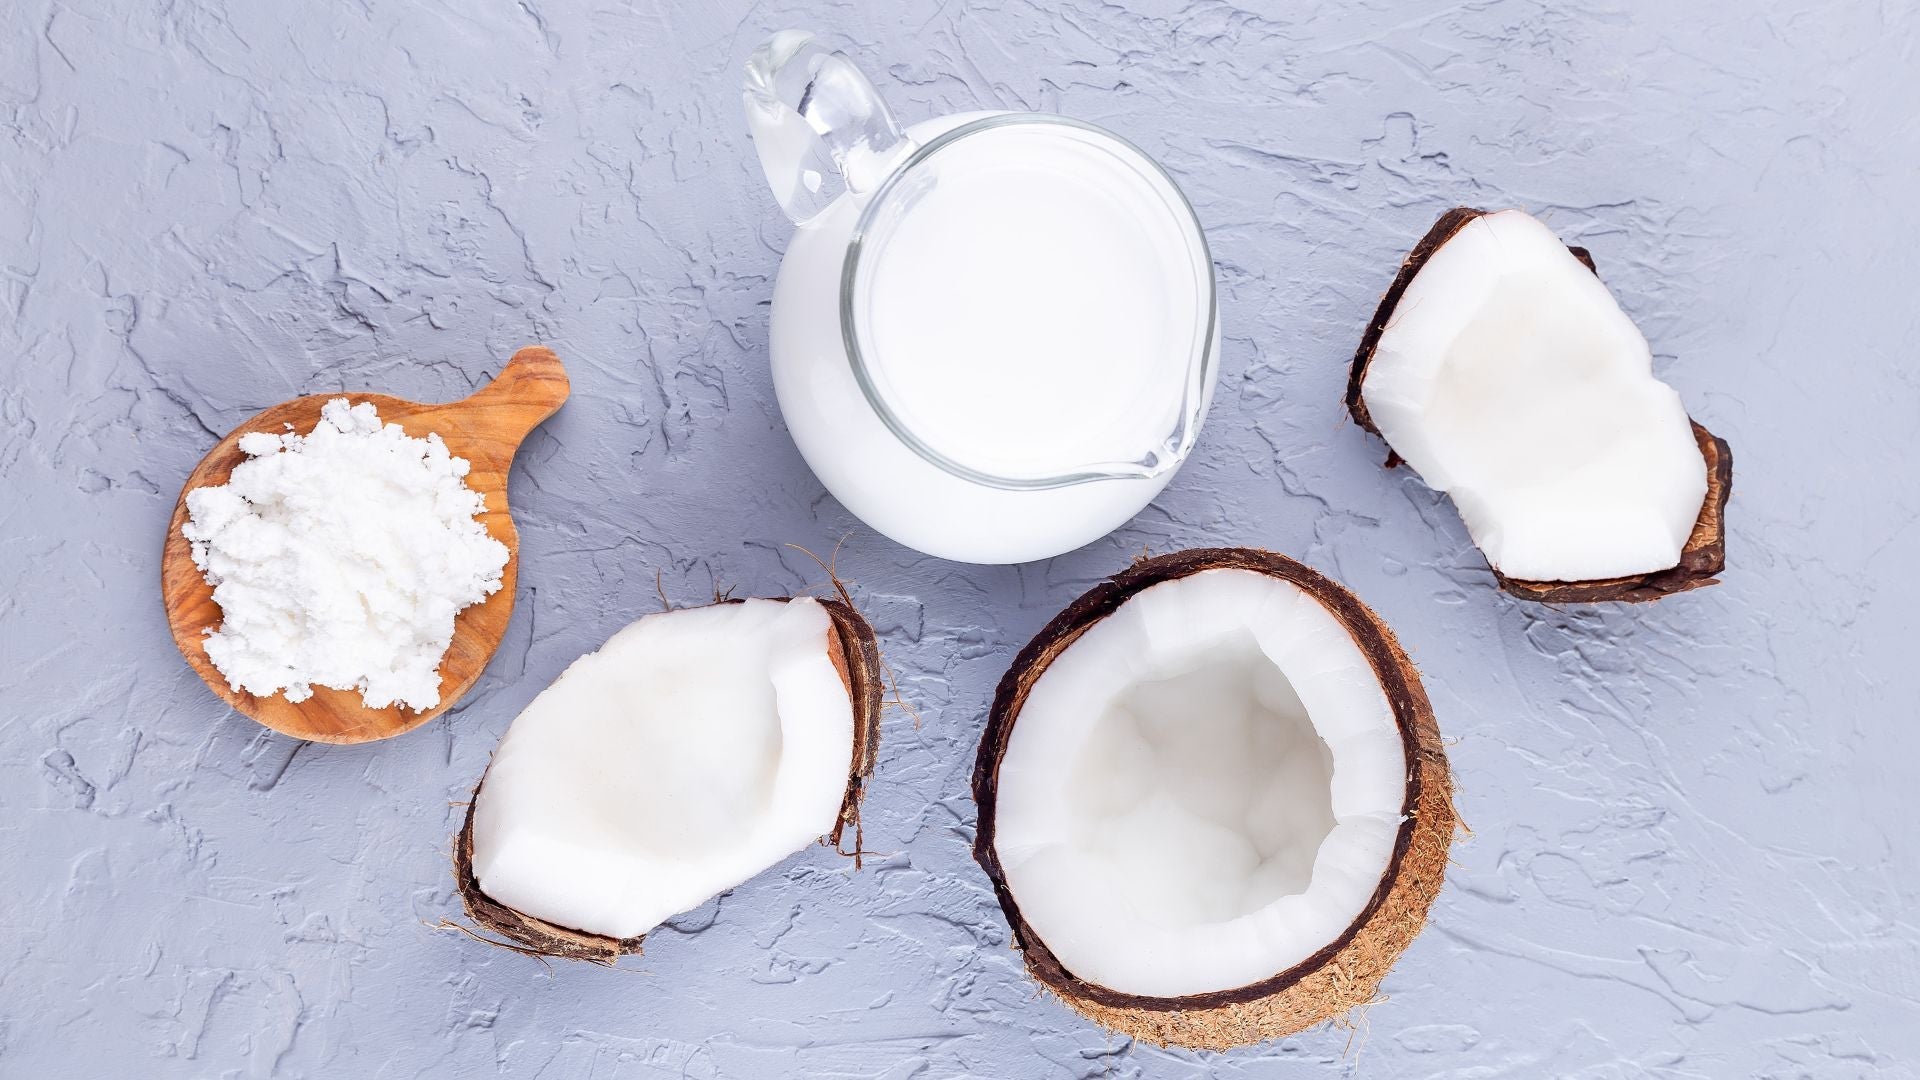 coconut, coconut milk, and coconut powder